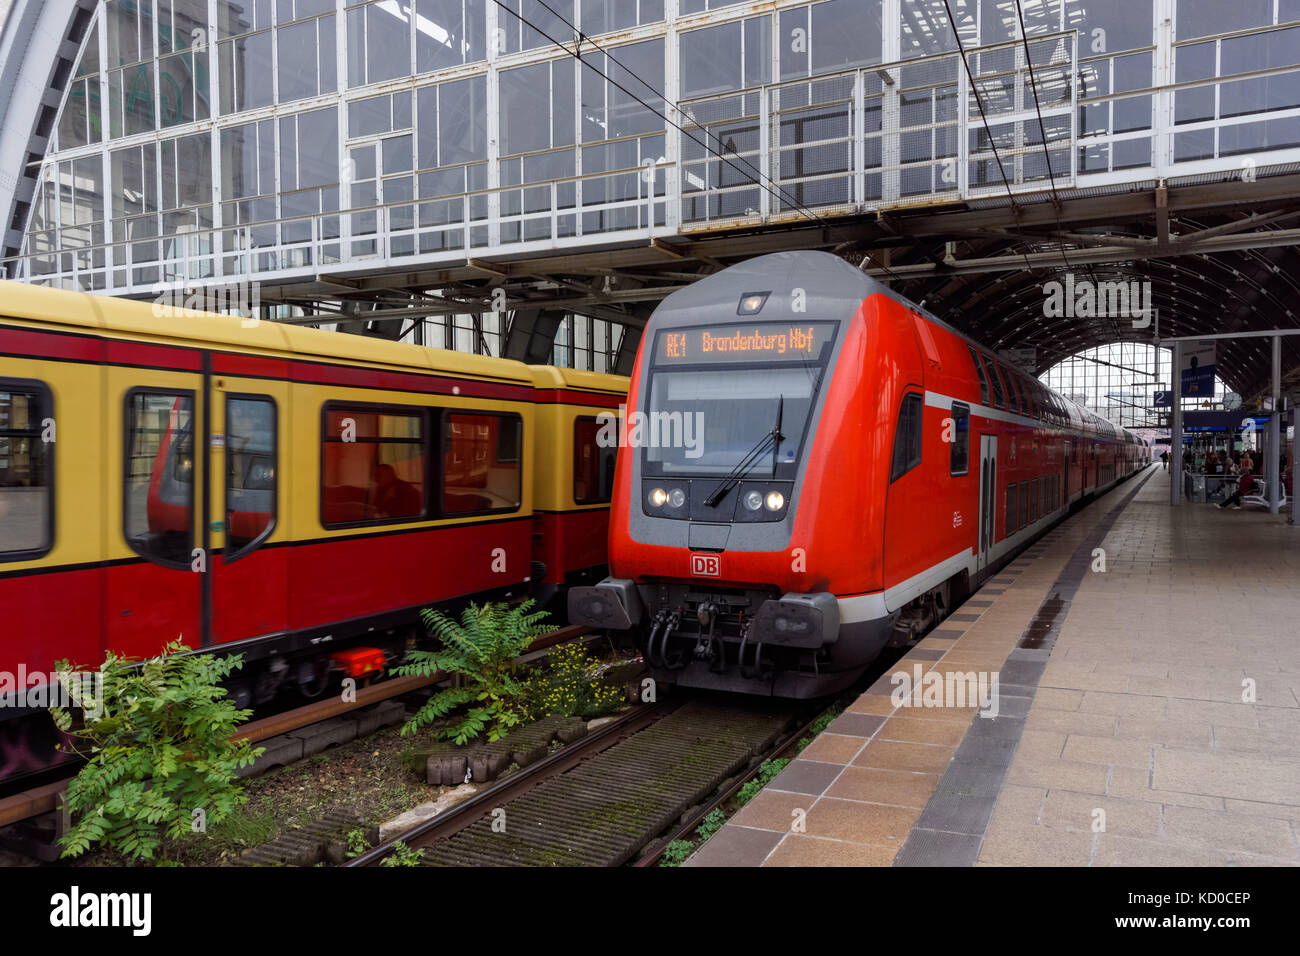 S-bahn trains at Alexanderplatz station in Berlin, Germany Stock Photo